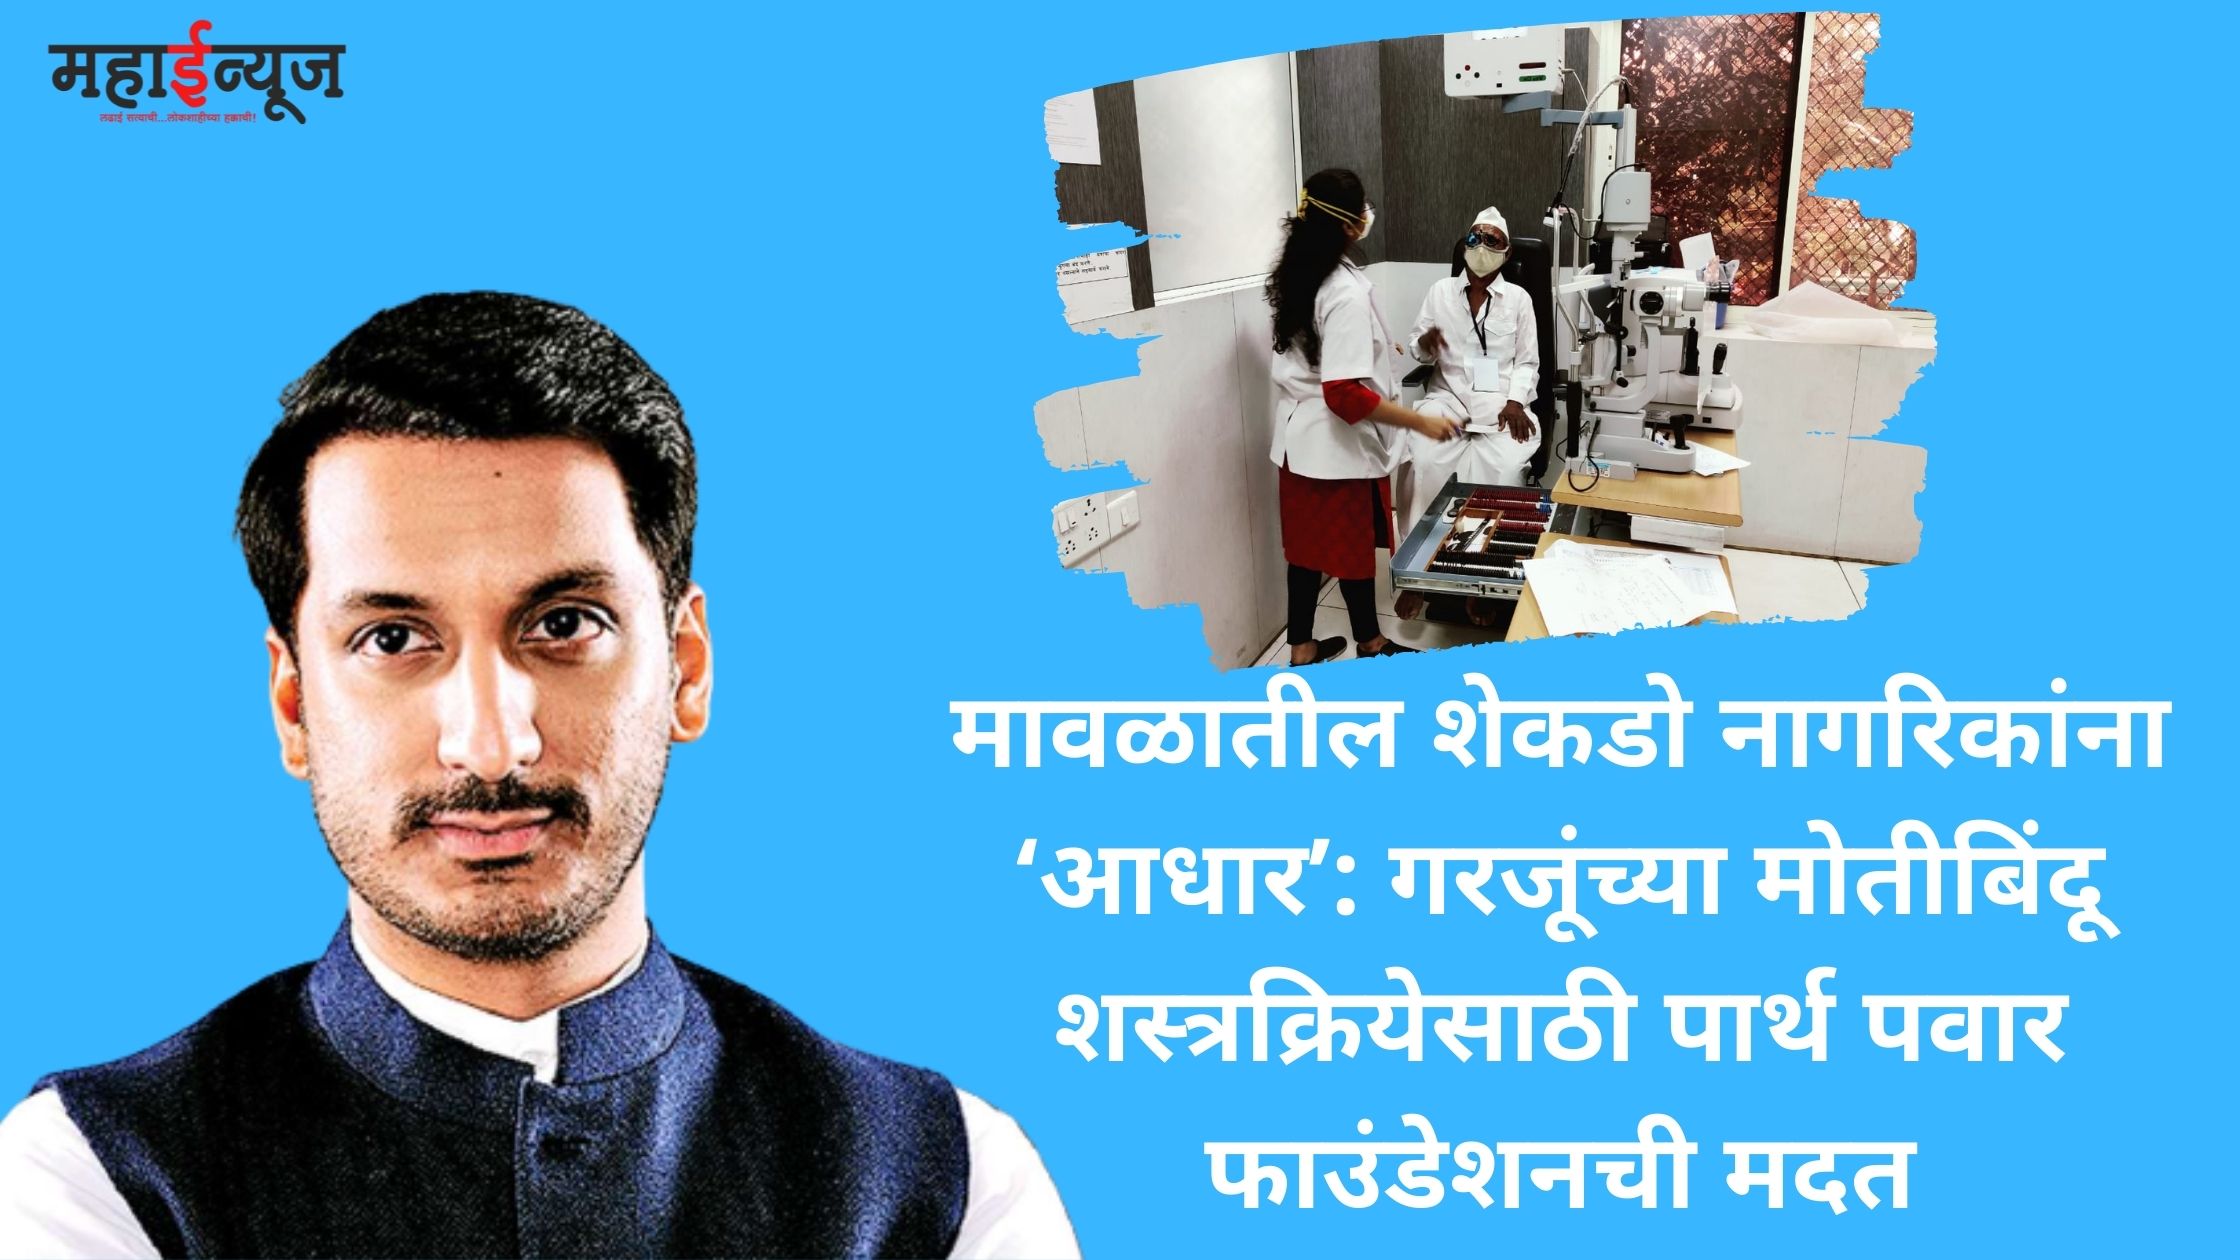 'Aadhaar' for hundreds of Mavla citizens: Parth Pawar Foundation's help for needy cataract surgery